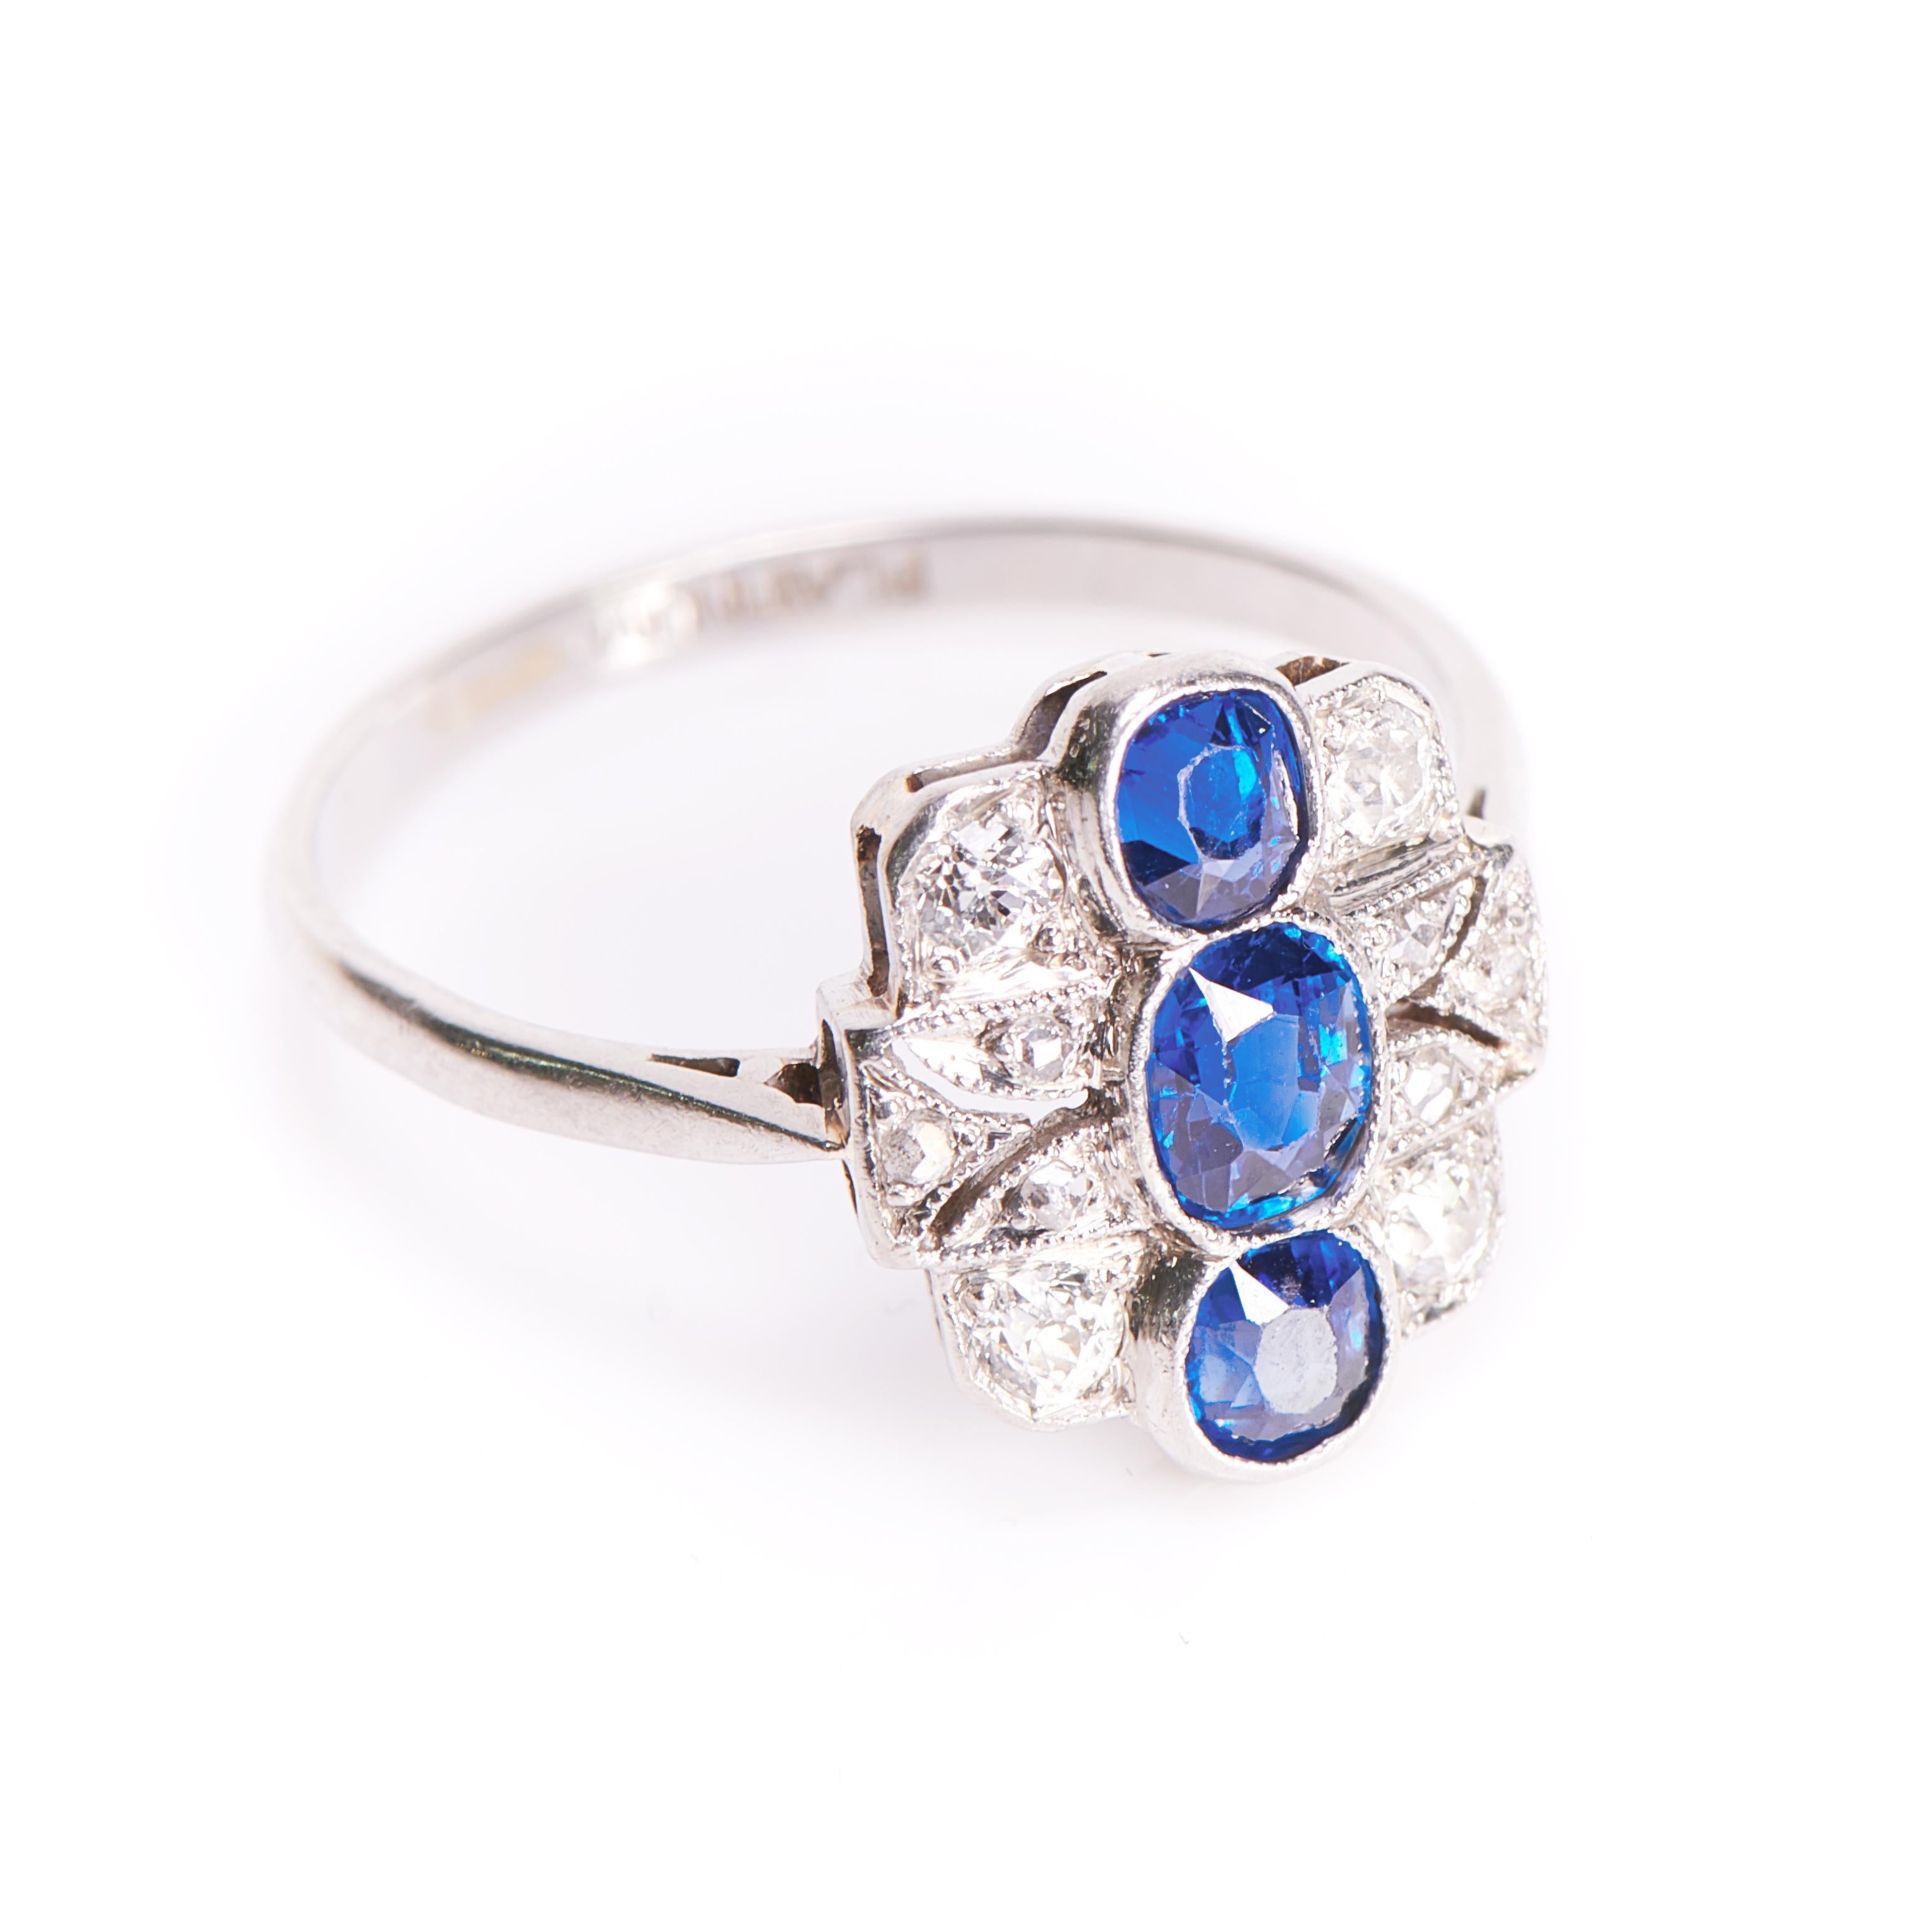 Old European Cut Antique, Art Deco, Platinum Sapphire and Diamond Engagement Ring